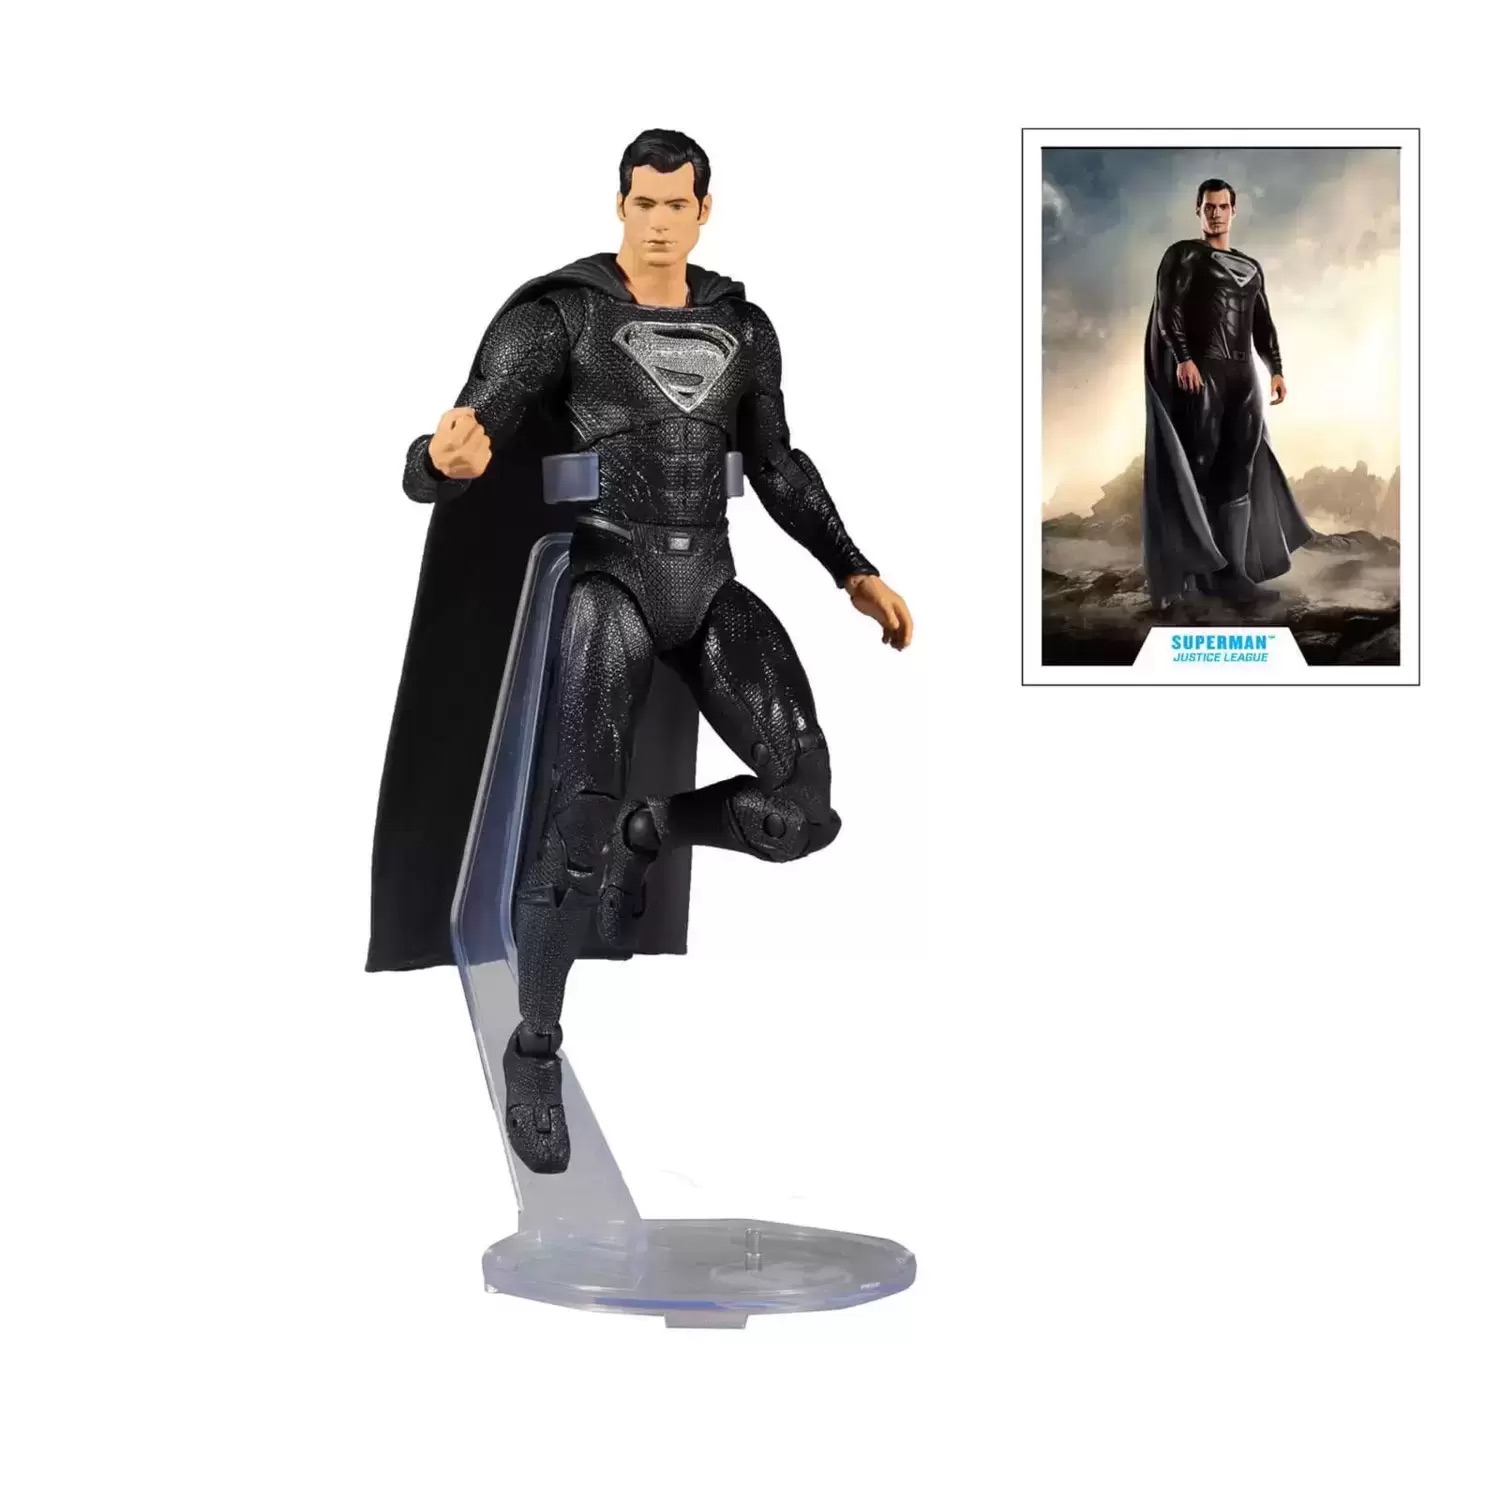 DC Comics Retro 8 Inch Figure Series Set of 2 Superman Figures Black Outfits 